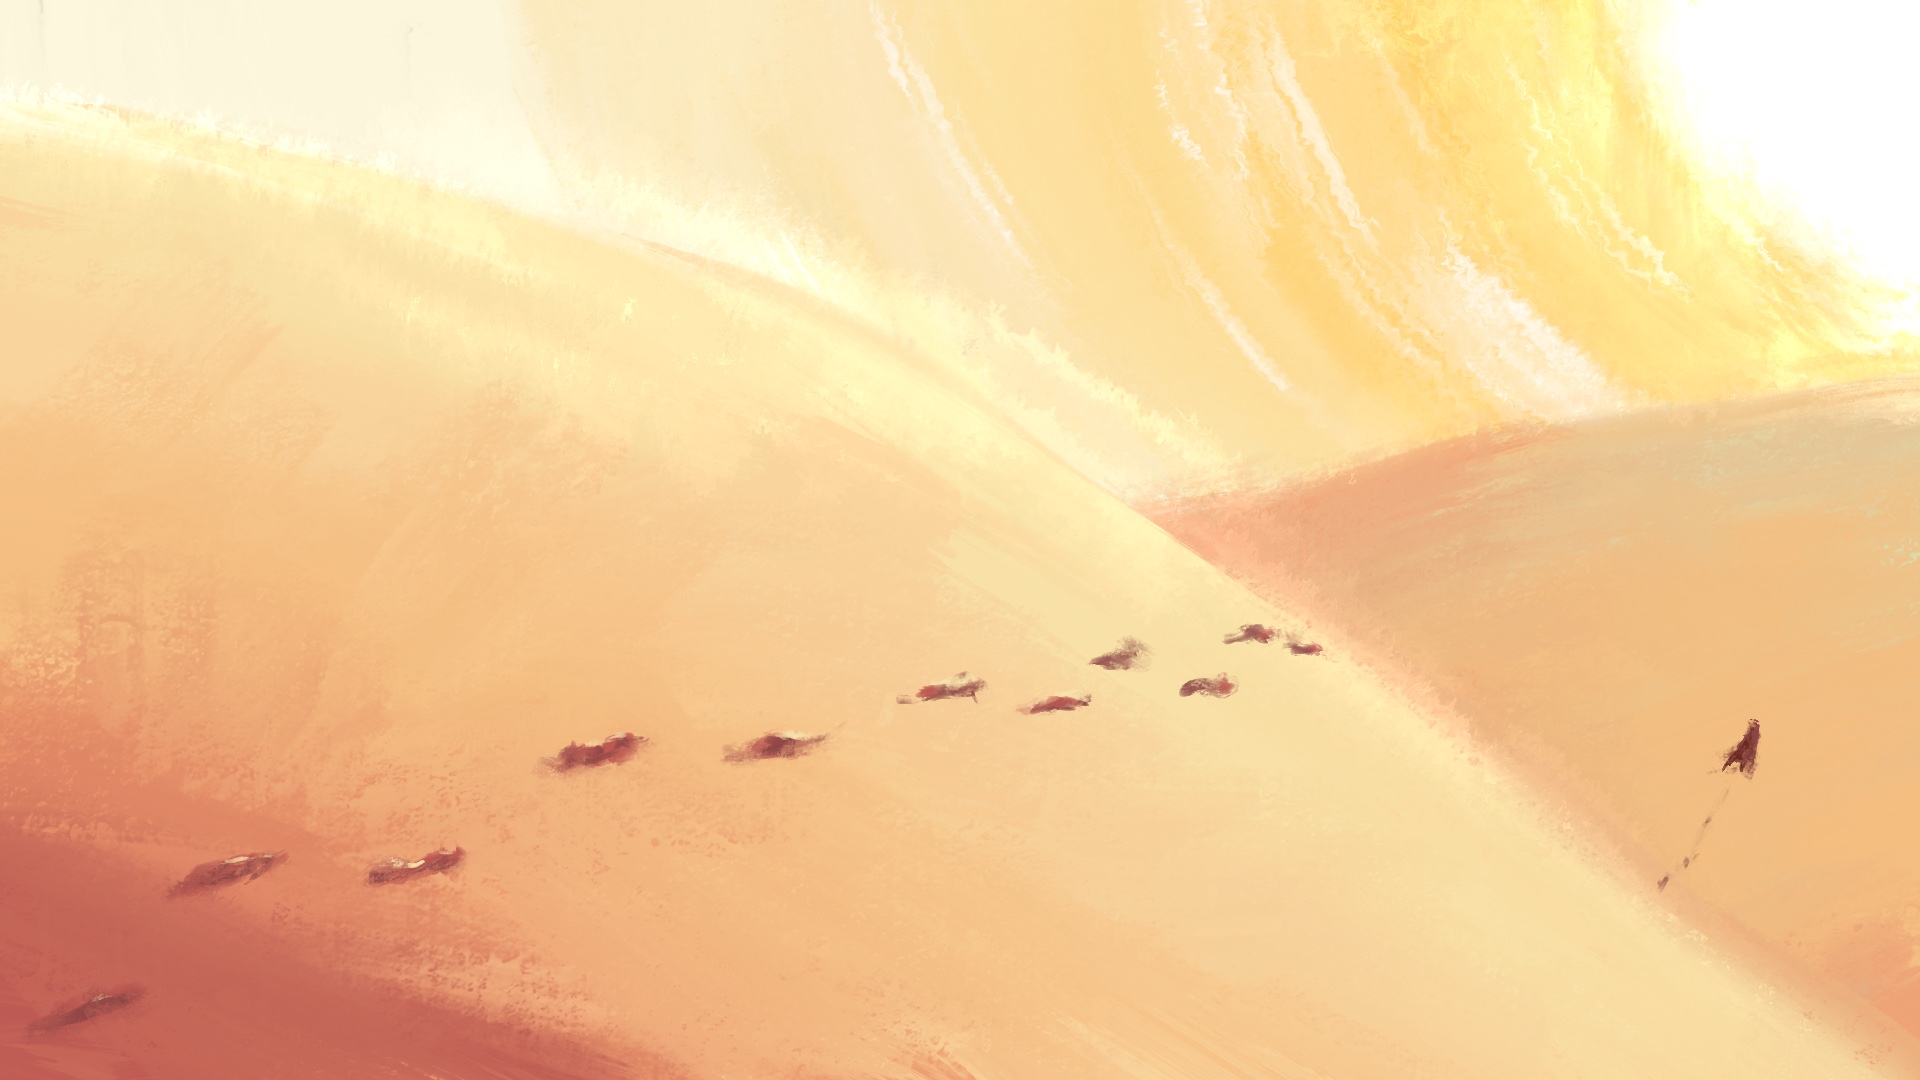 wandering through the desert